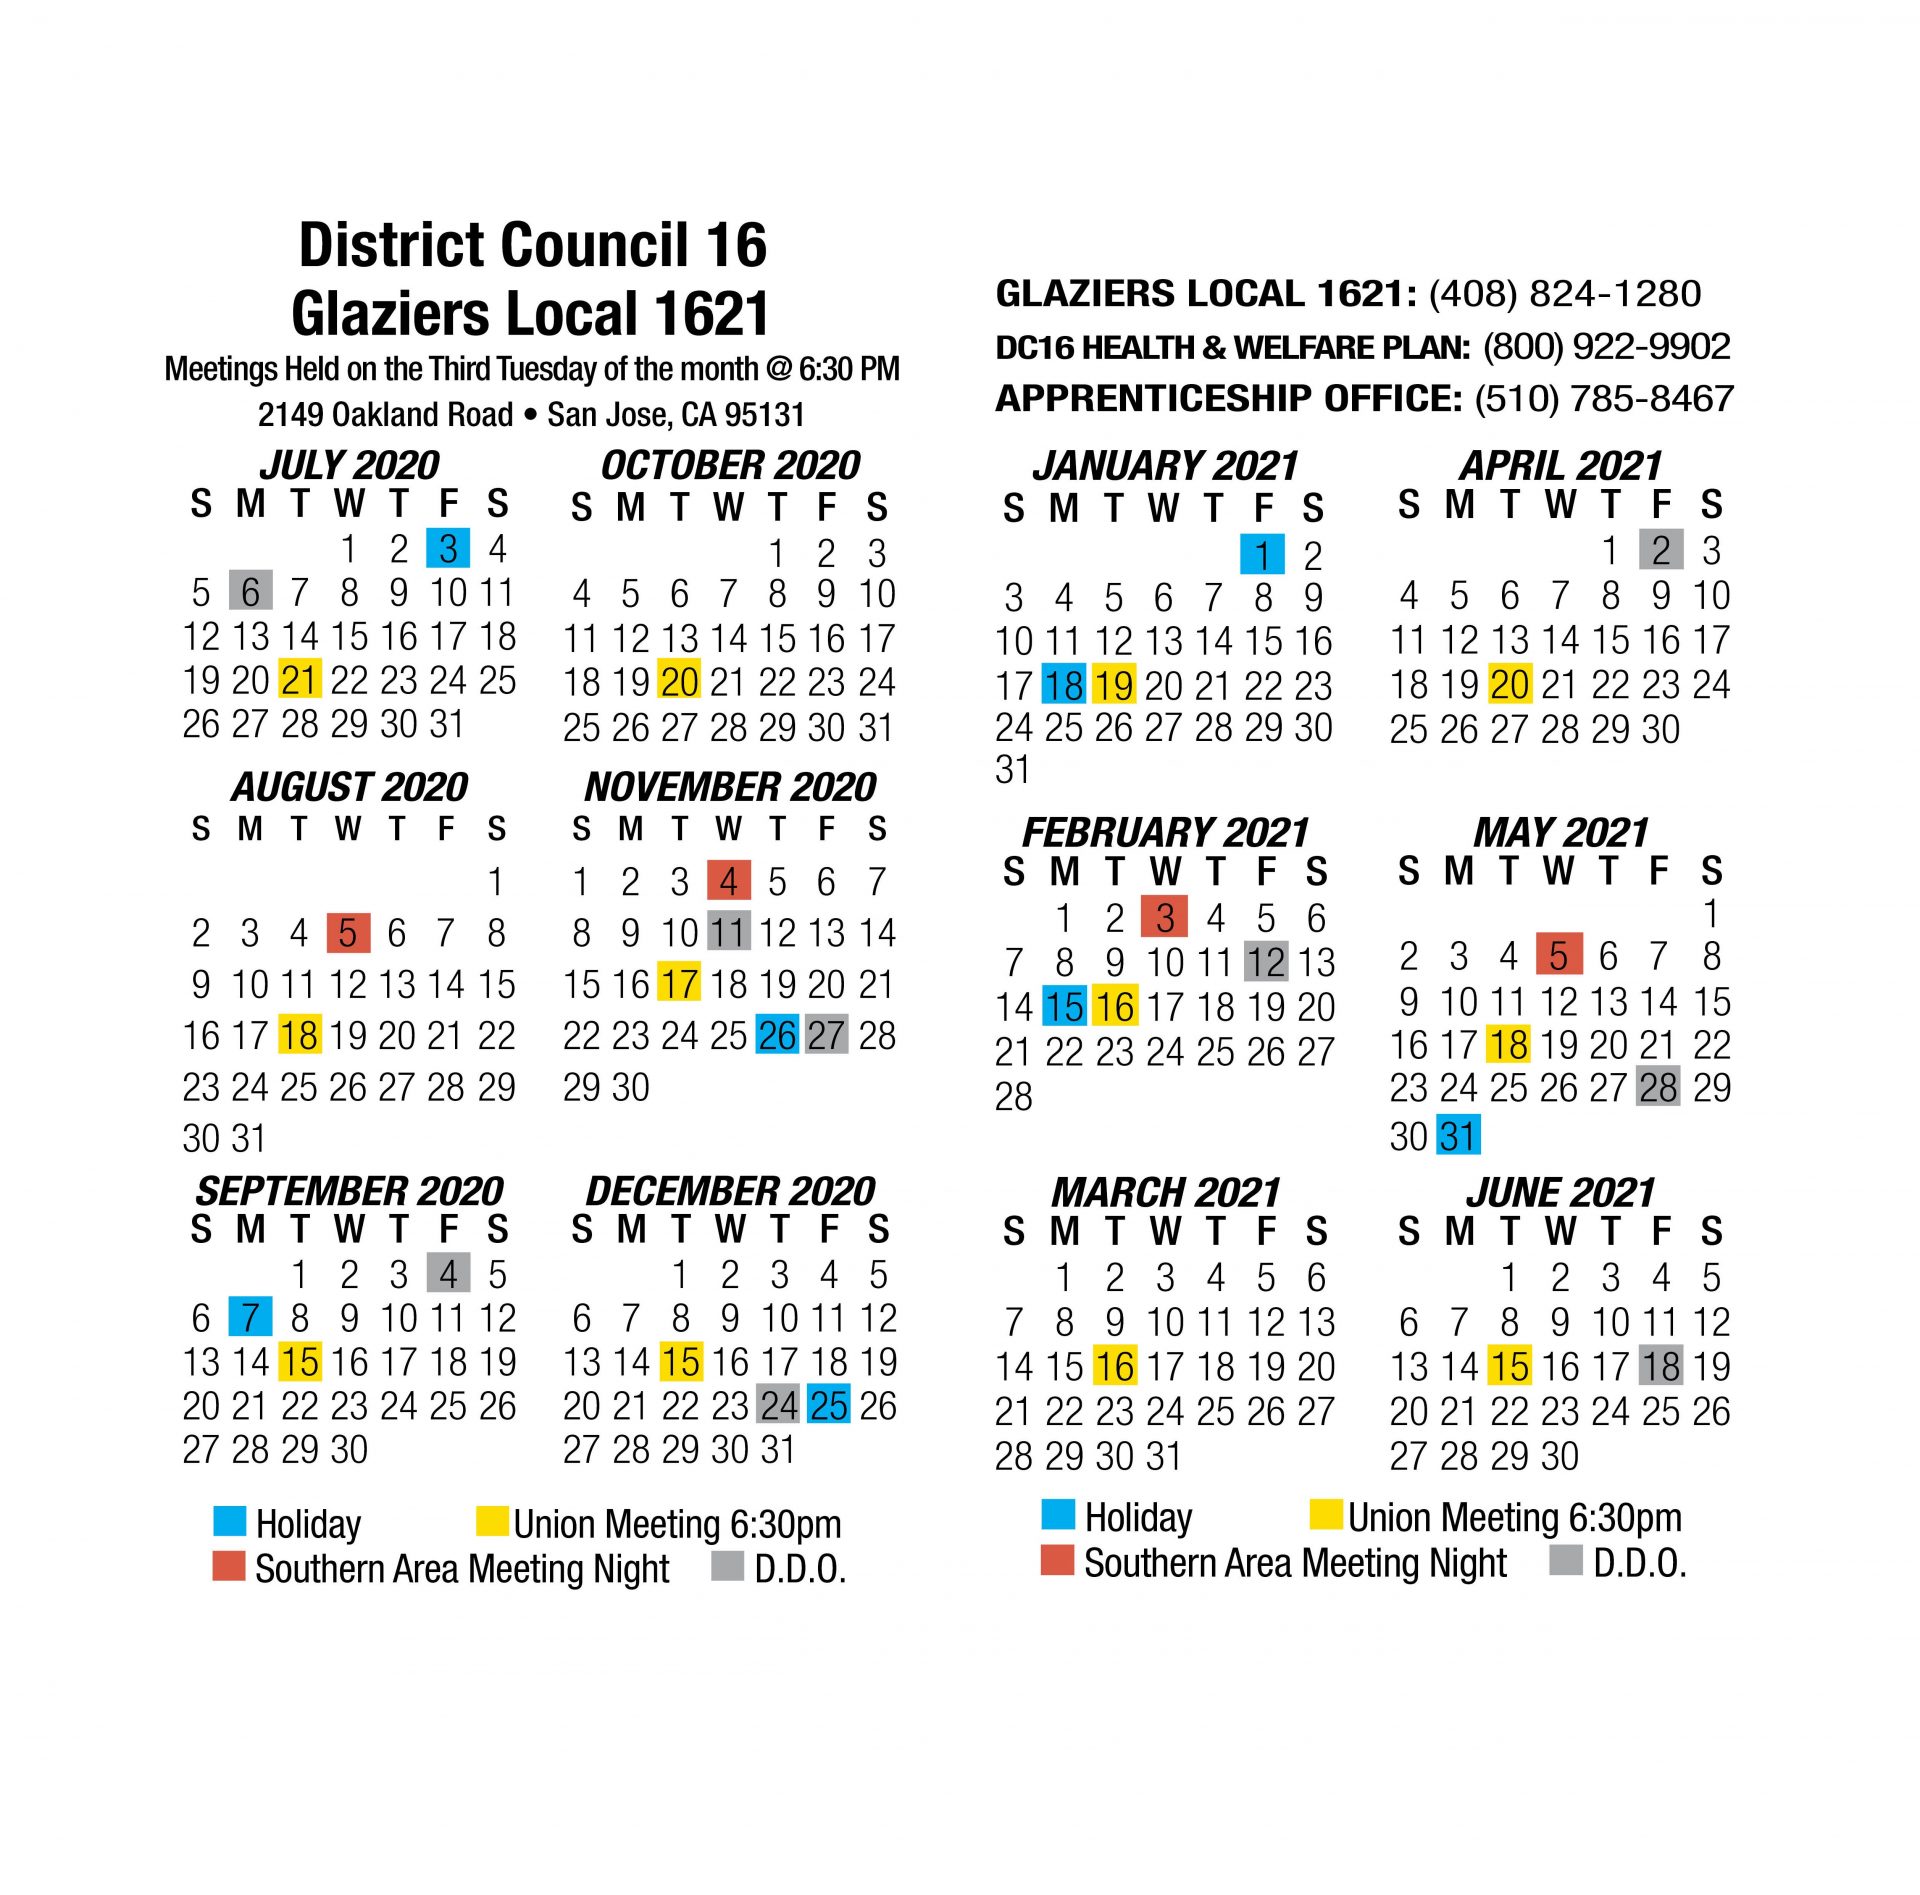 Holiday & DDO Schedule DC16 UNION